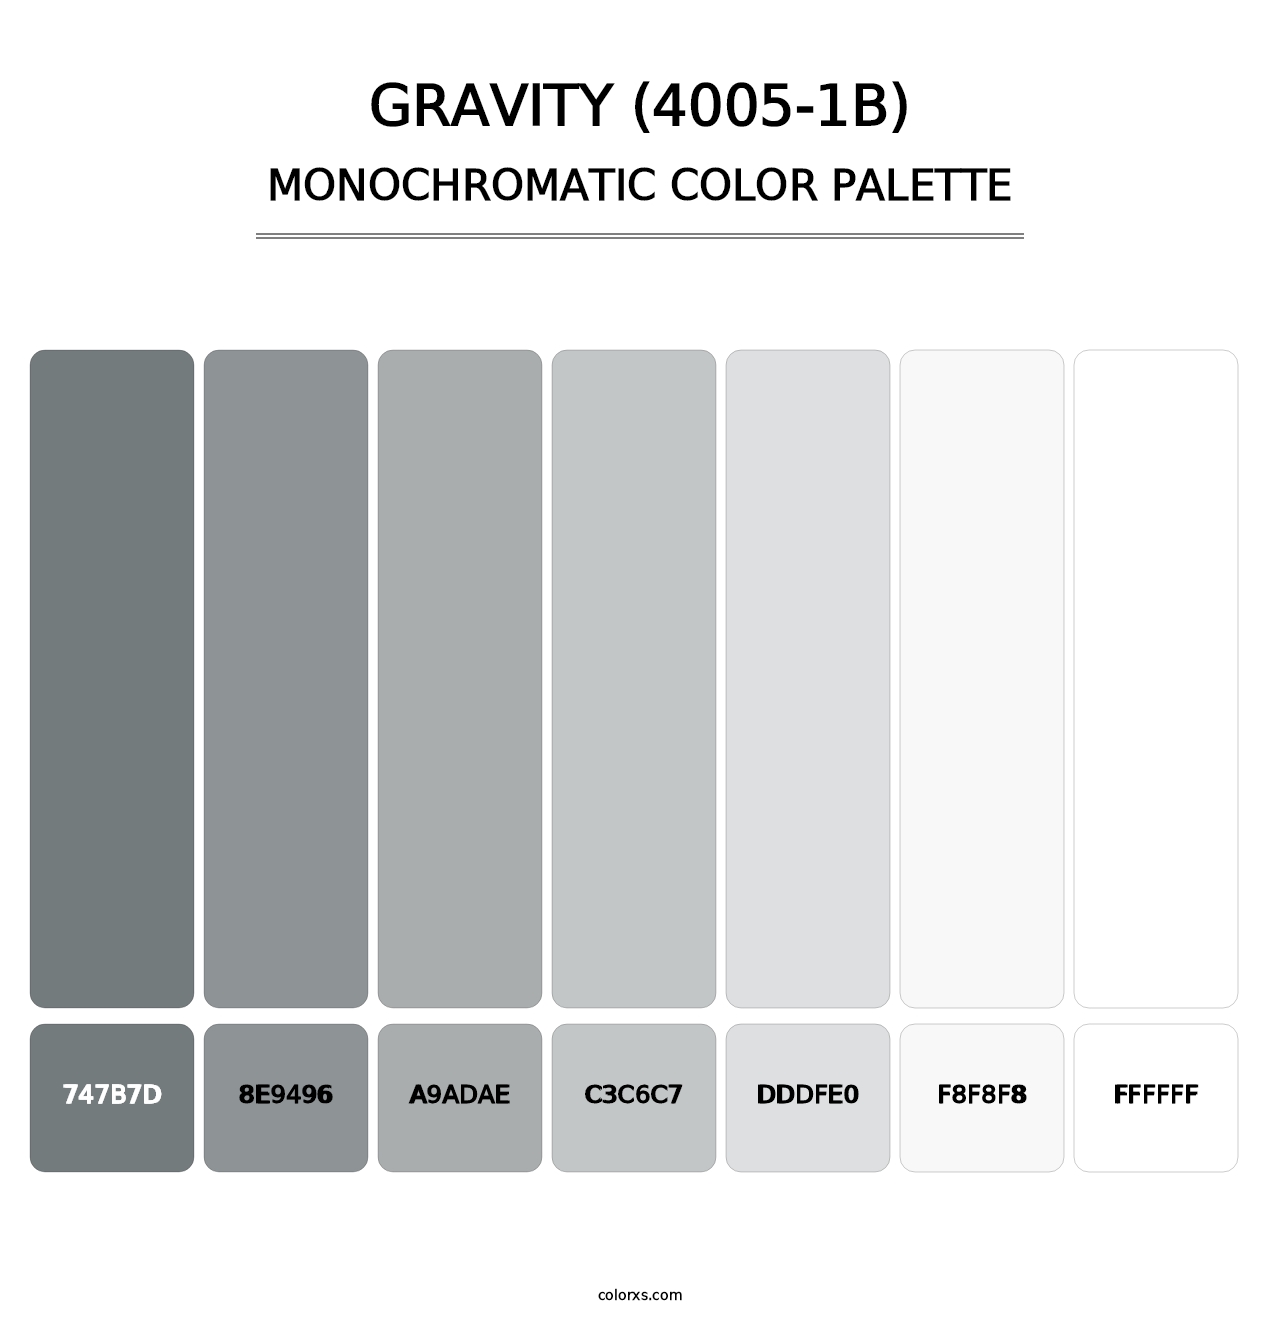 Gravity (4005-1B) - Monochromatic Color Palette